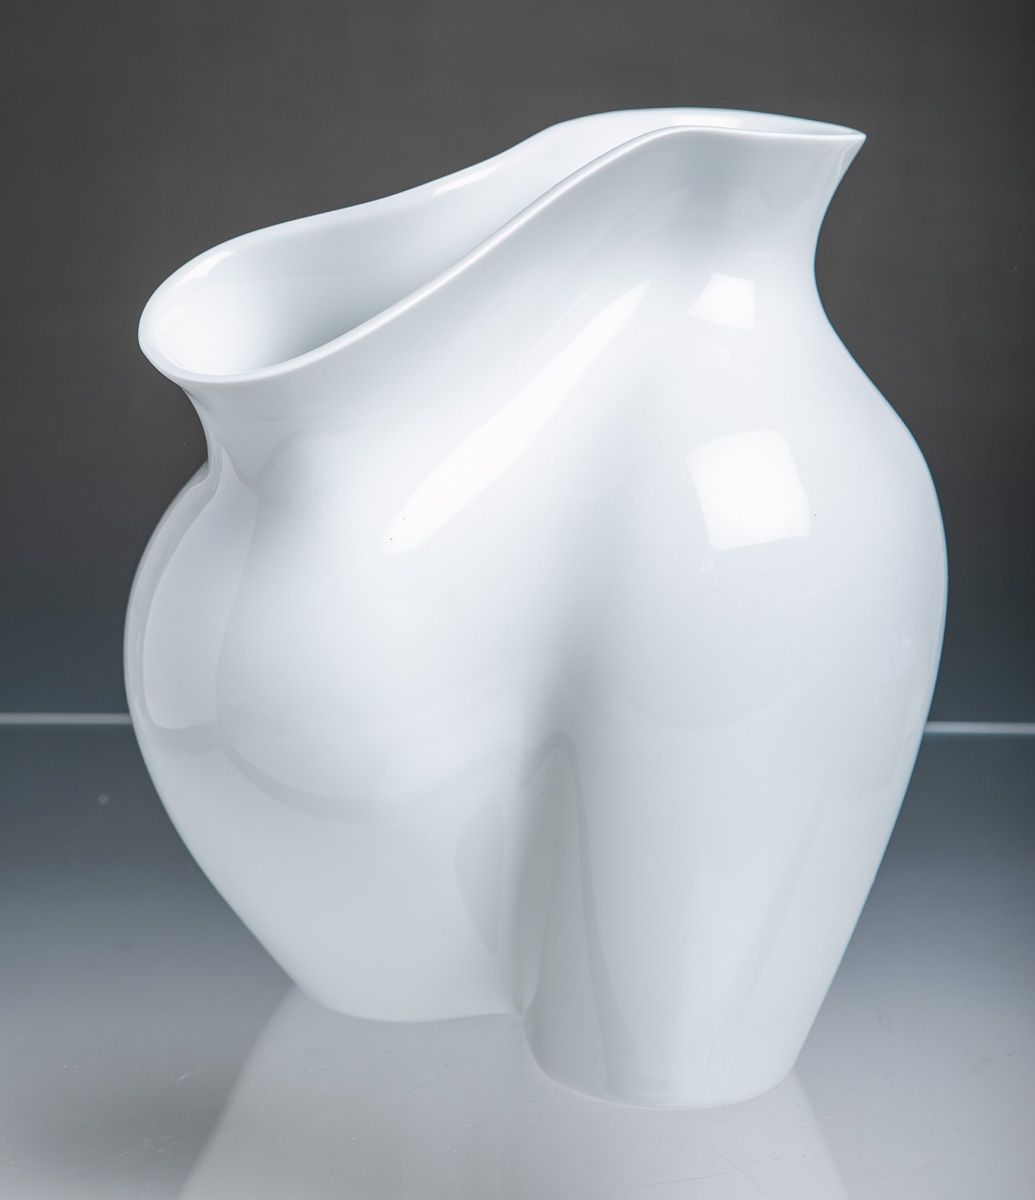 Null 设计师花瓶（罗森塔尔，工作室系列），白色瓷器，由塞德里克-拉戈特（1973 - 2015）设计，约26 x 23 x 17厘米。未损坏。